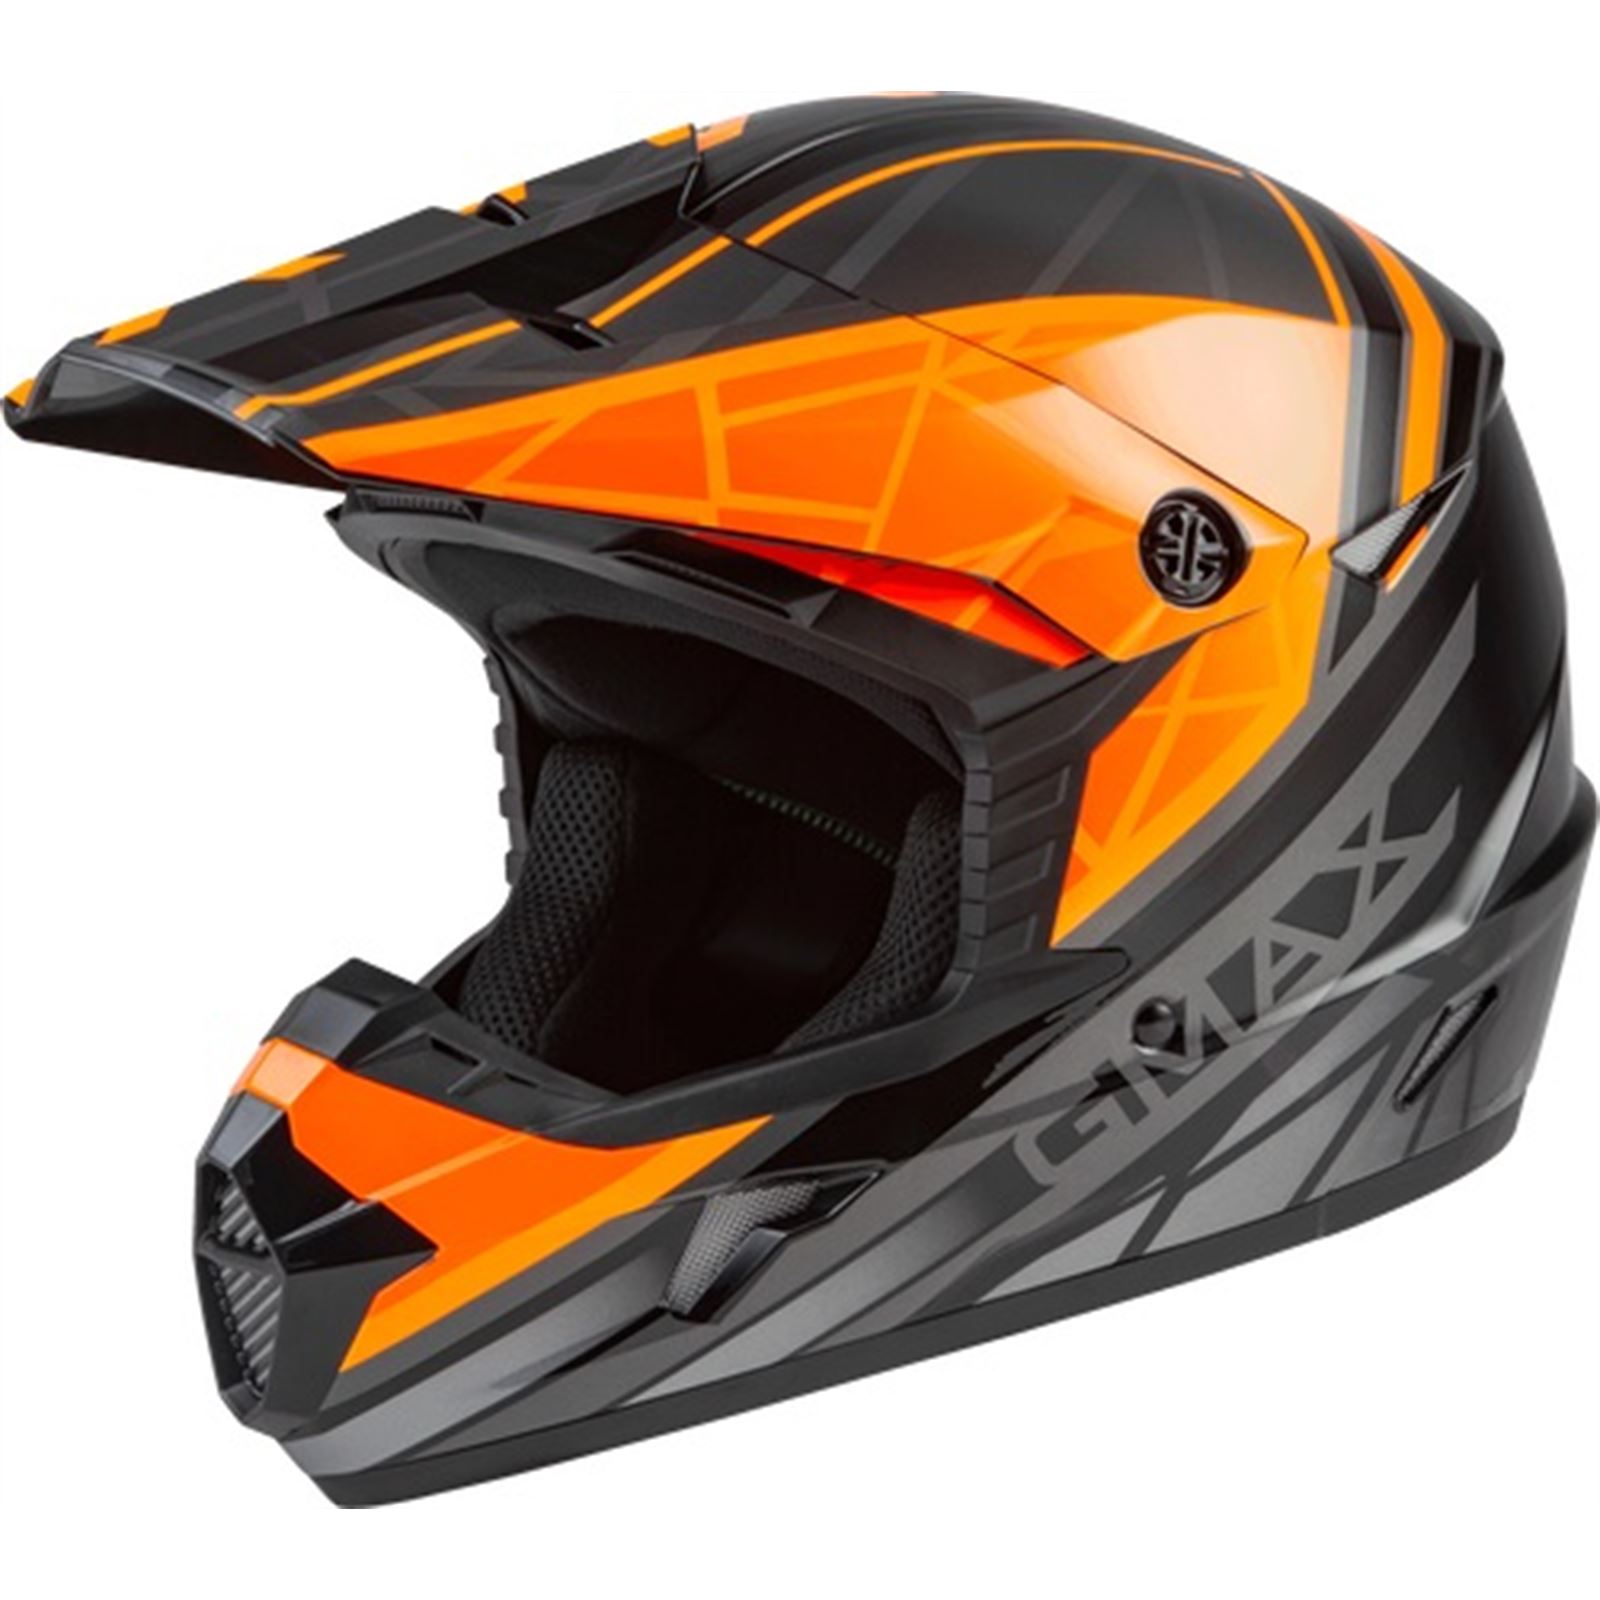 GMax MX-46 Off-Road Mega Helmet - Black/Orange/Silver - Large